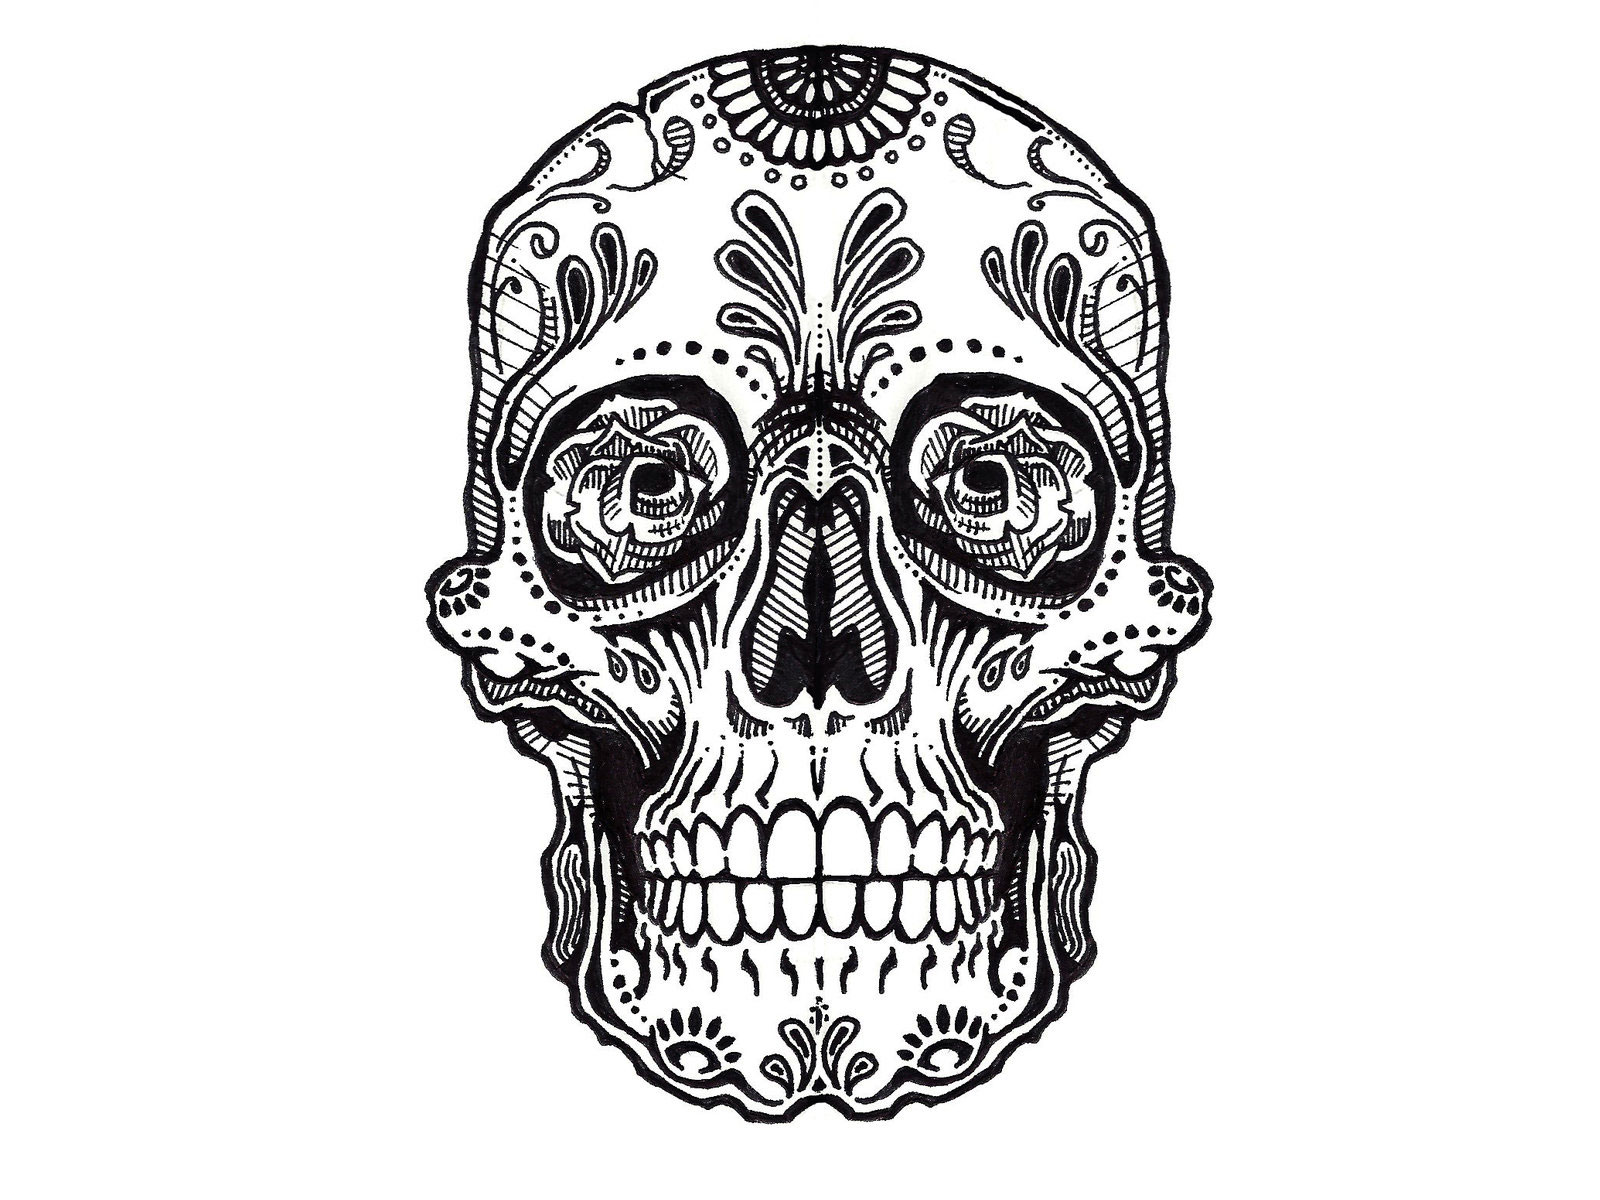 Skull Tattoo Design Hq Backgrounds Hd Wallpapers Gallery - Cute Sugar Skull Designs - HD Wallpaper 